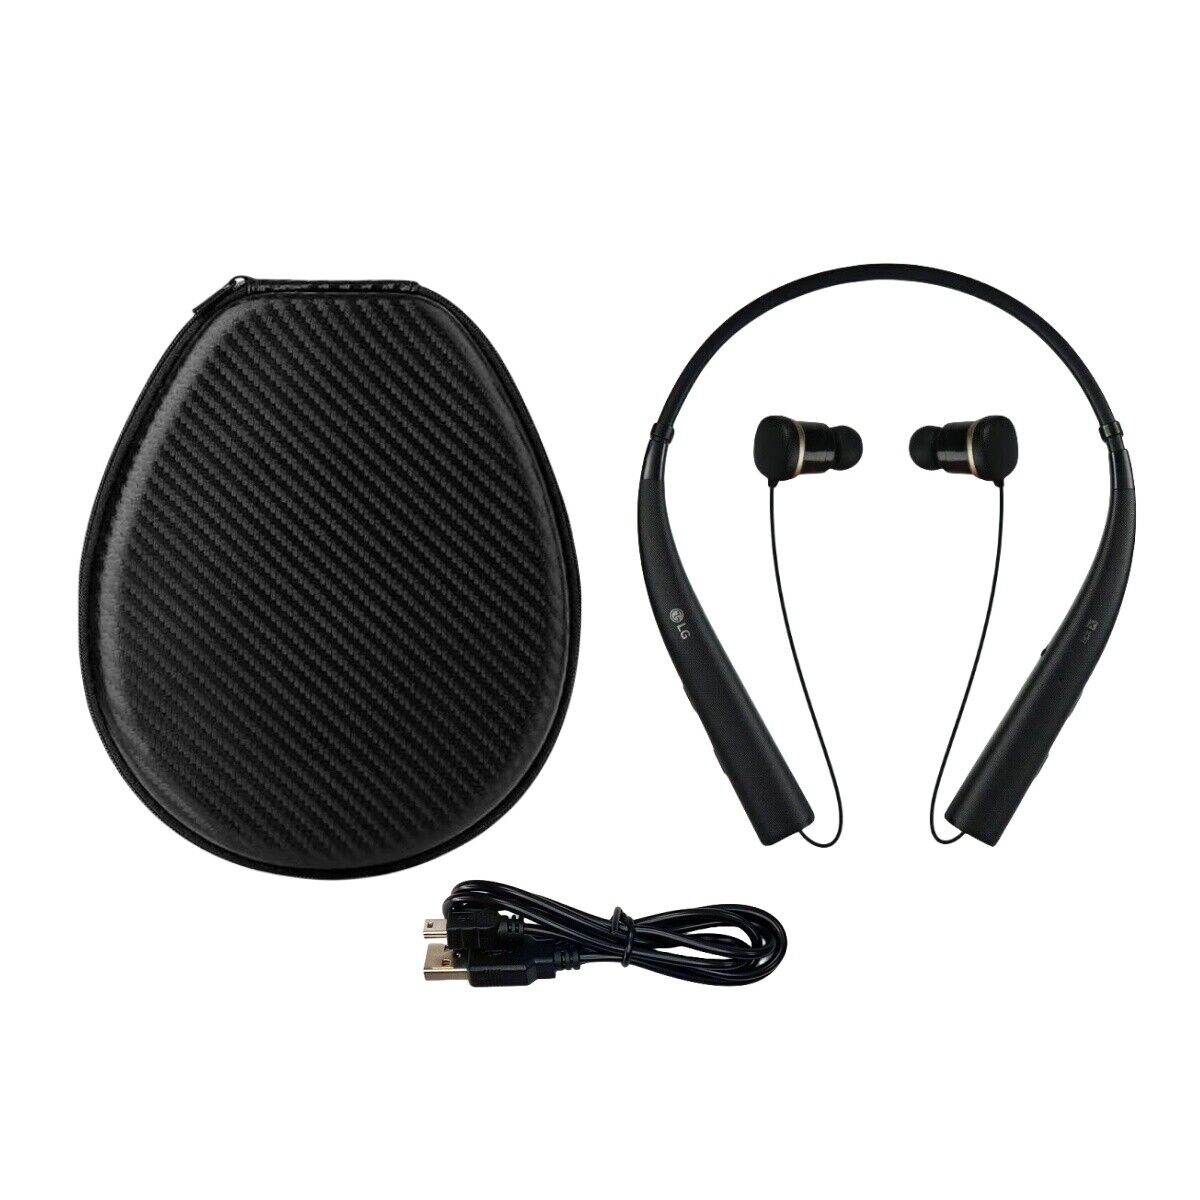 LG Tone Pro HBS-780 Premium Wireless Stereo Neckband Bluetooth Headset US